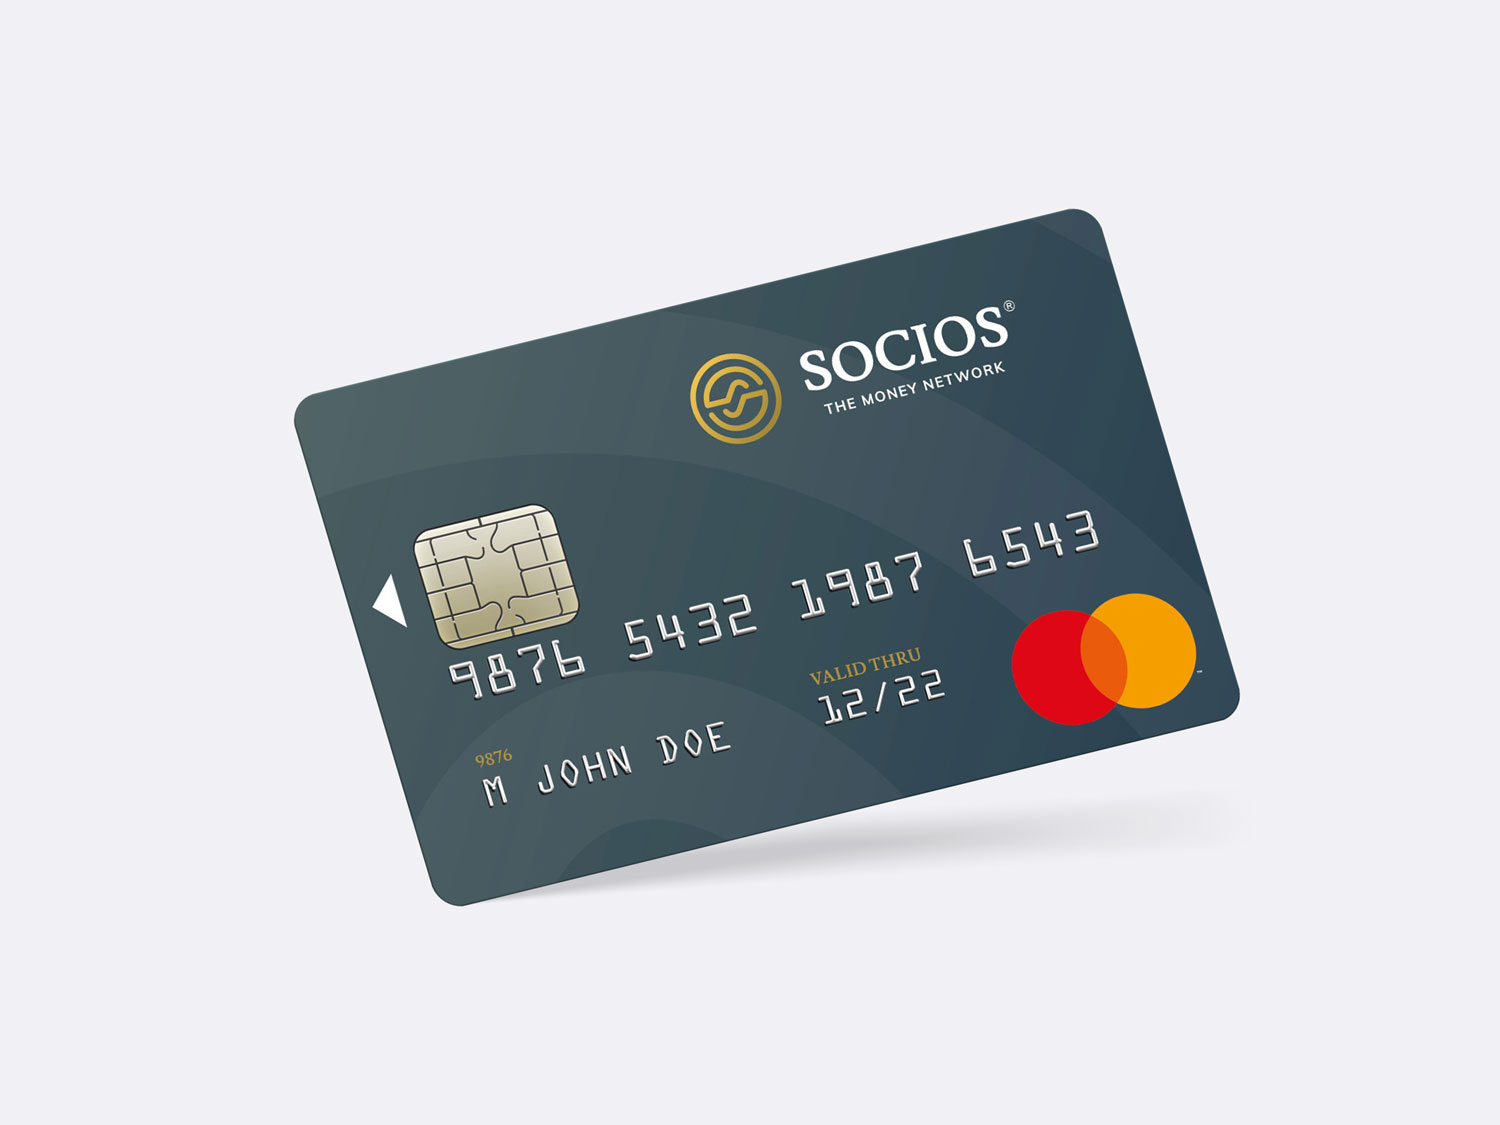 Socios creditcard